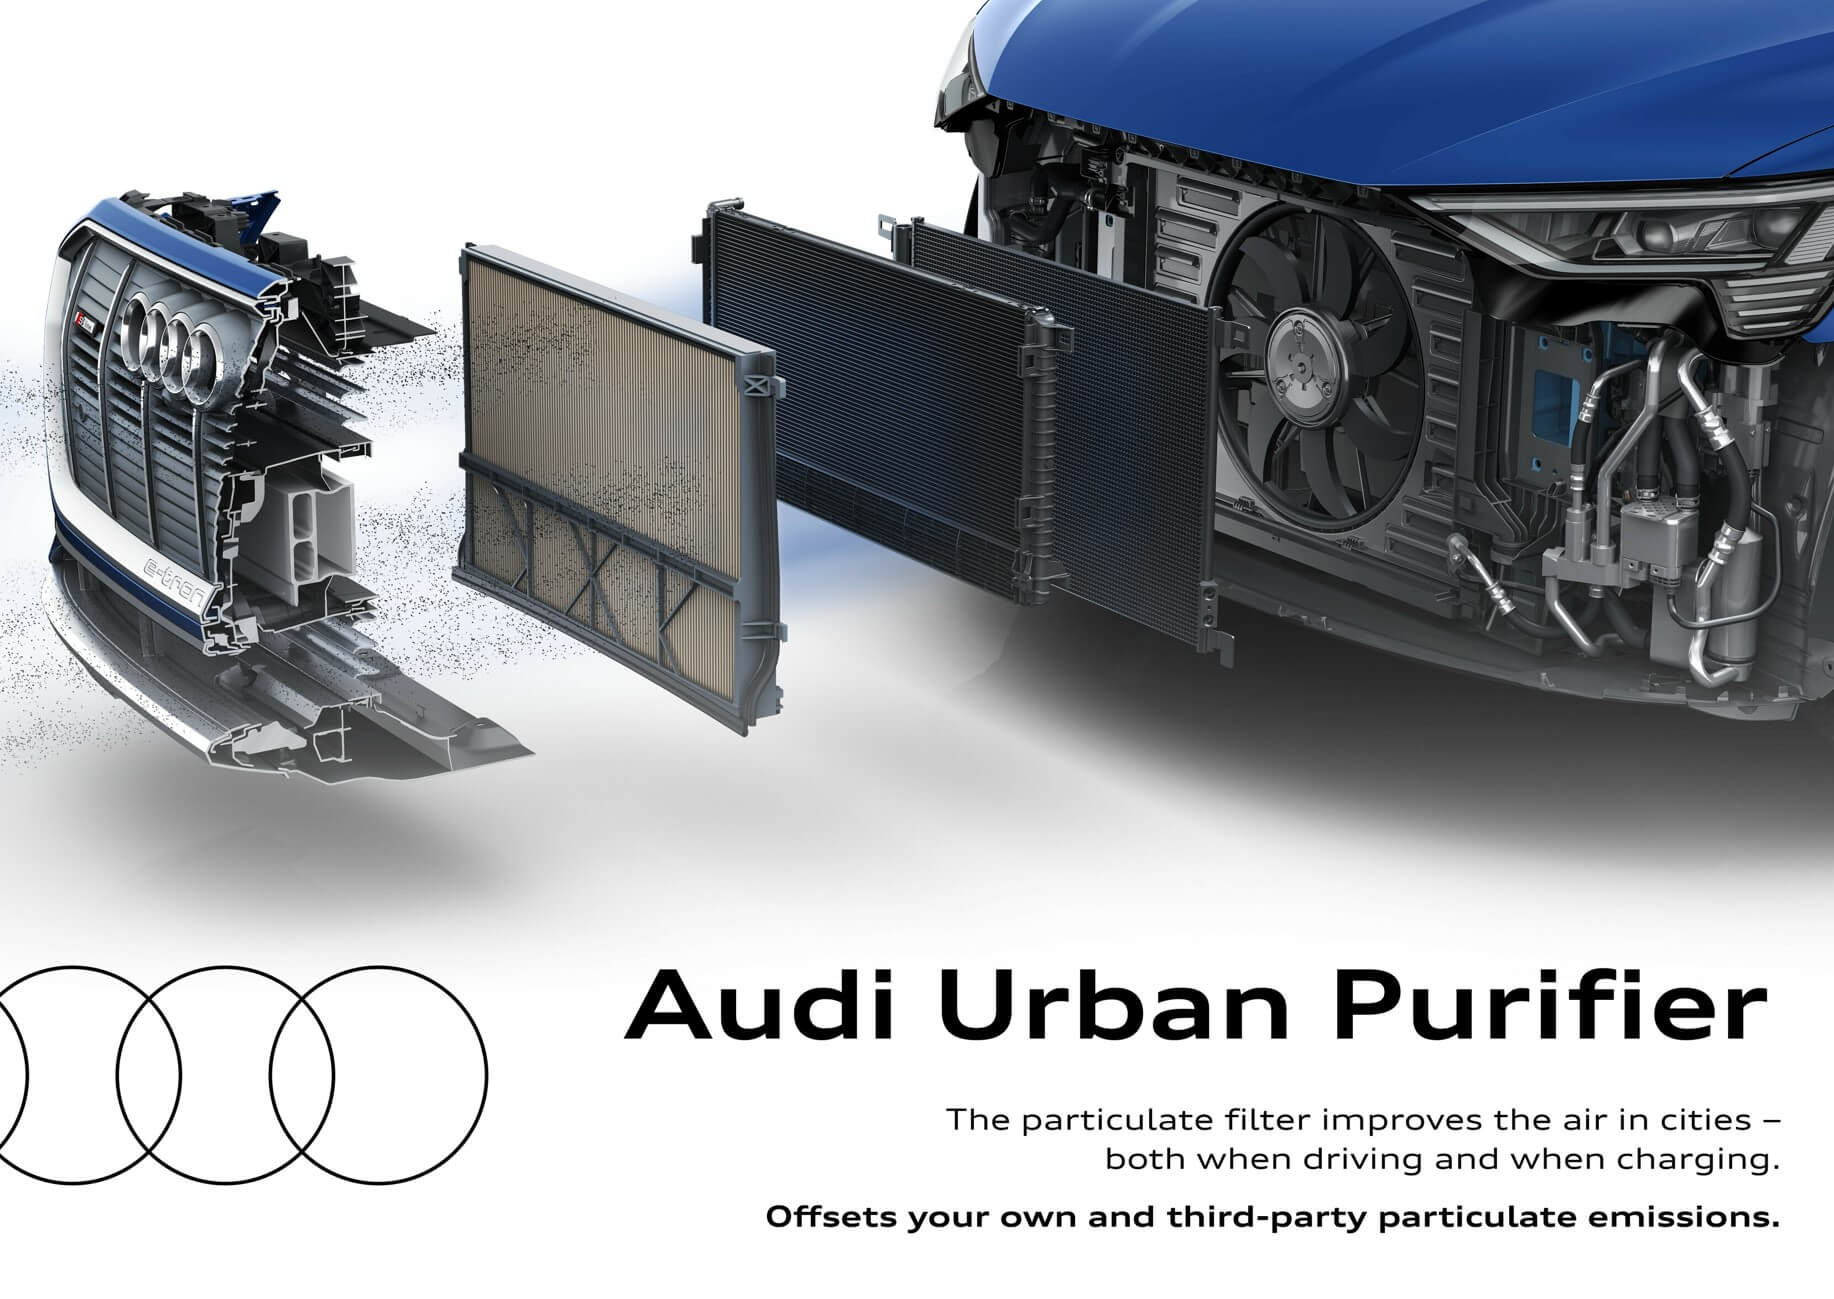 aria-label="Audi Urban Purifier 2"